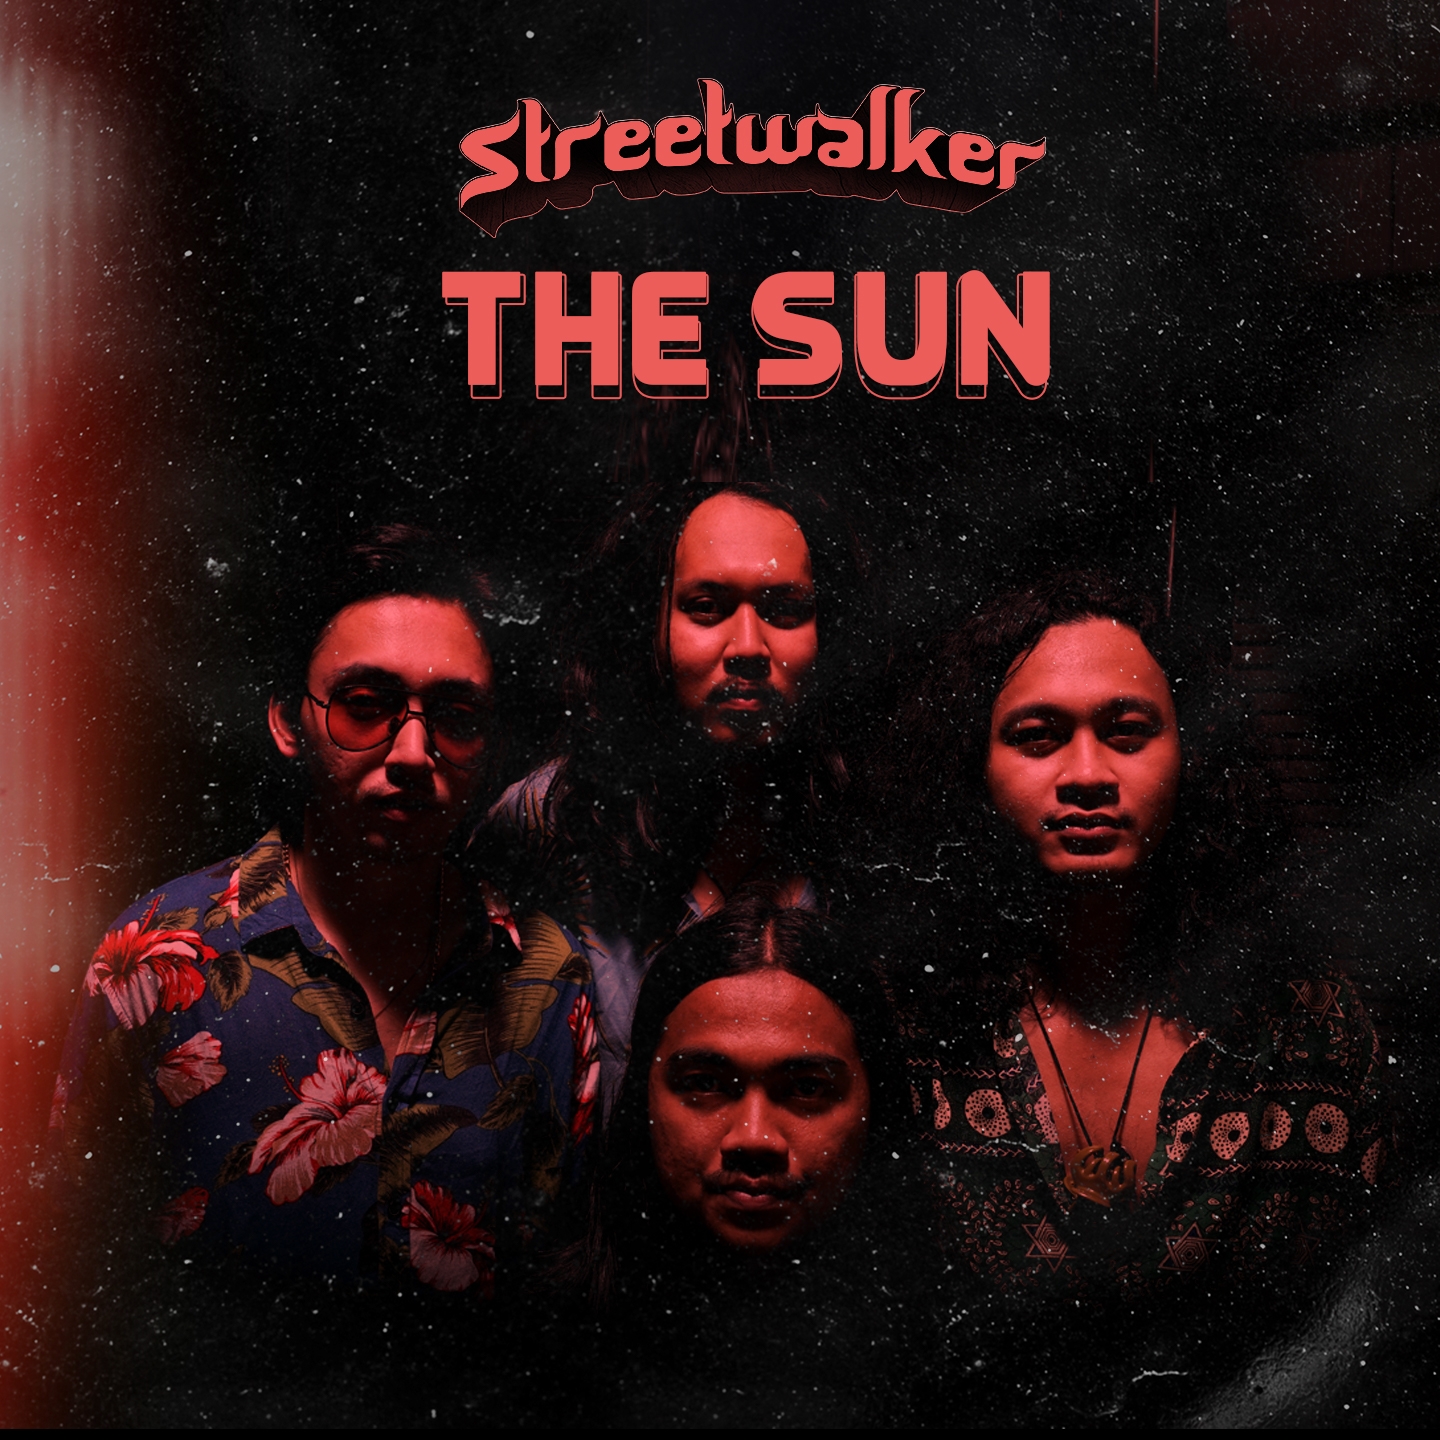 Lewat "The Sun" Streetwalker Semakin Dewasa